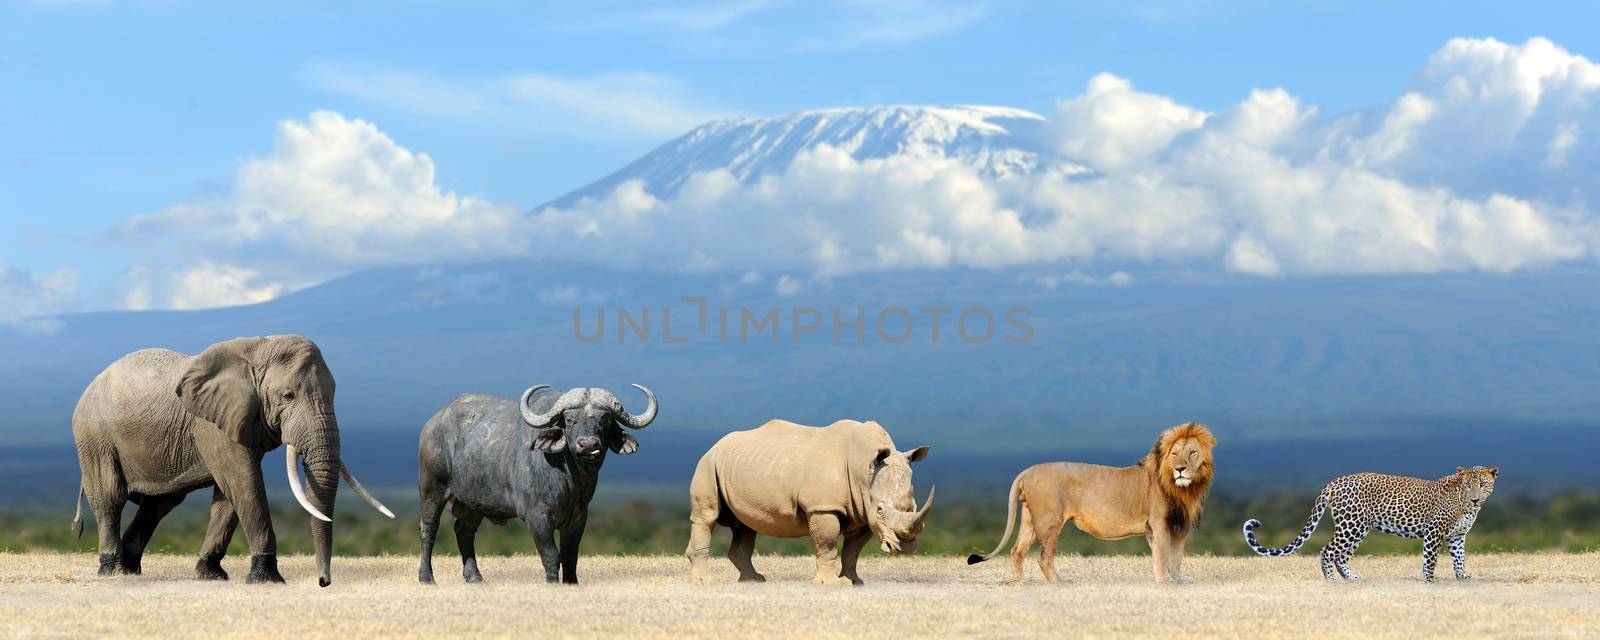 Big five africa - Lion, Elephant, Leopard, Buffalo and Rhinoceros